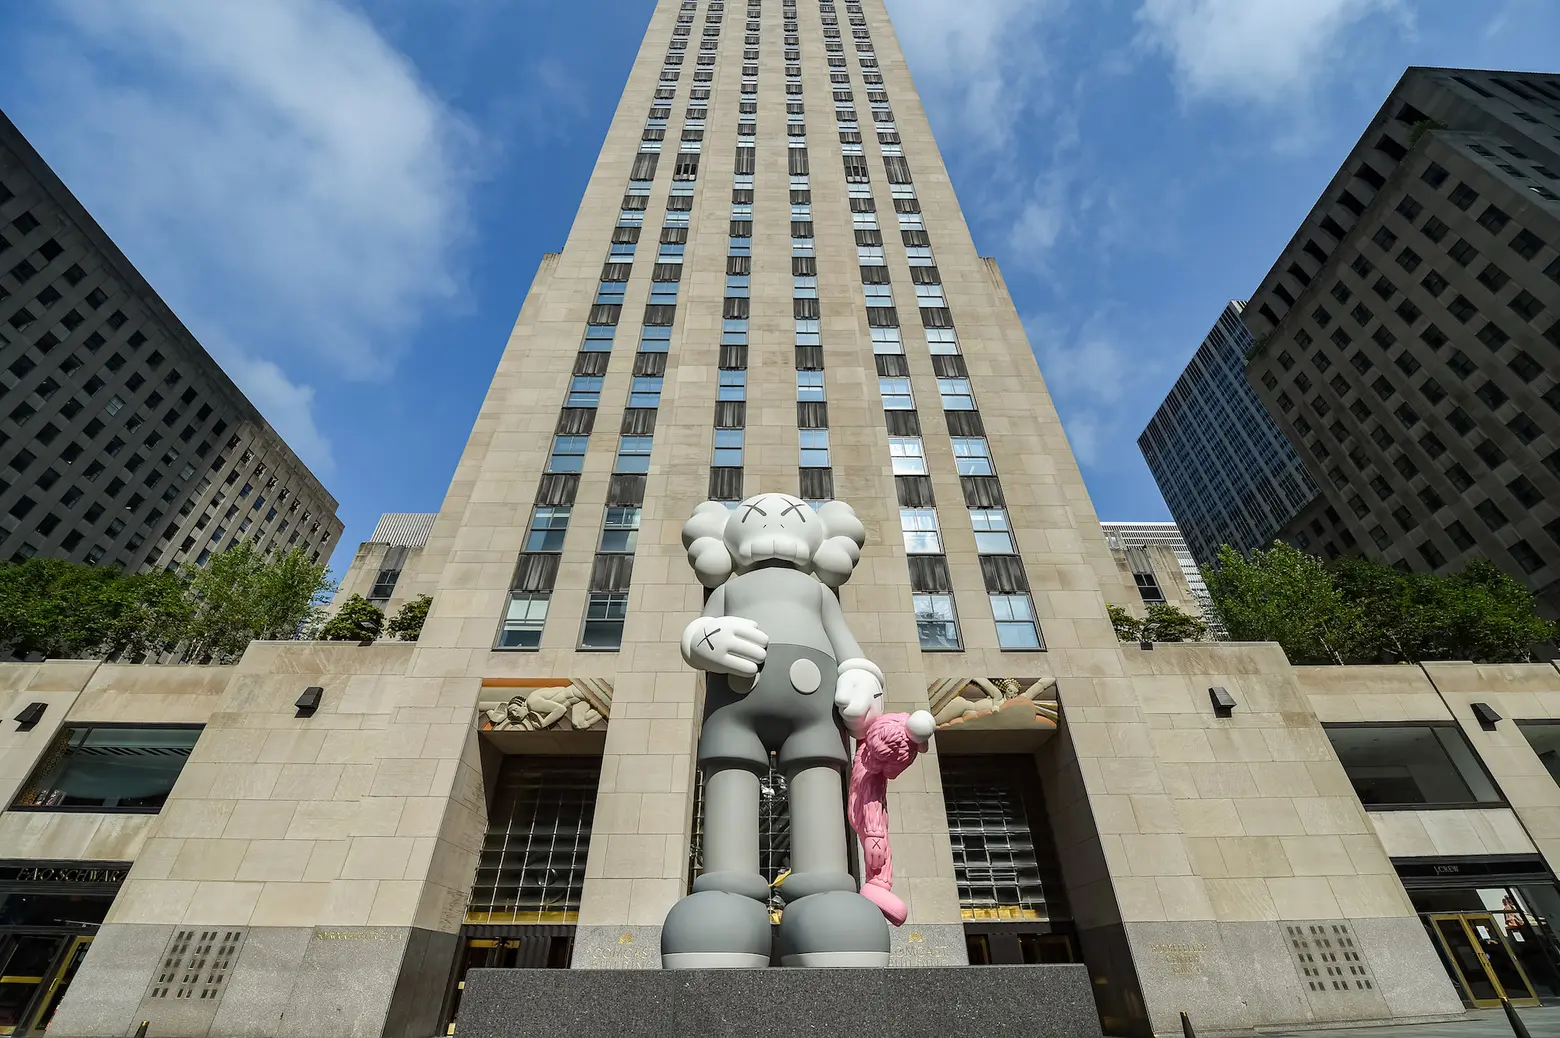 KAWS unveils new 18-foot sculpture at Rockefeller Center